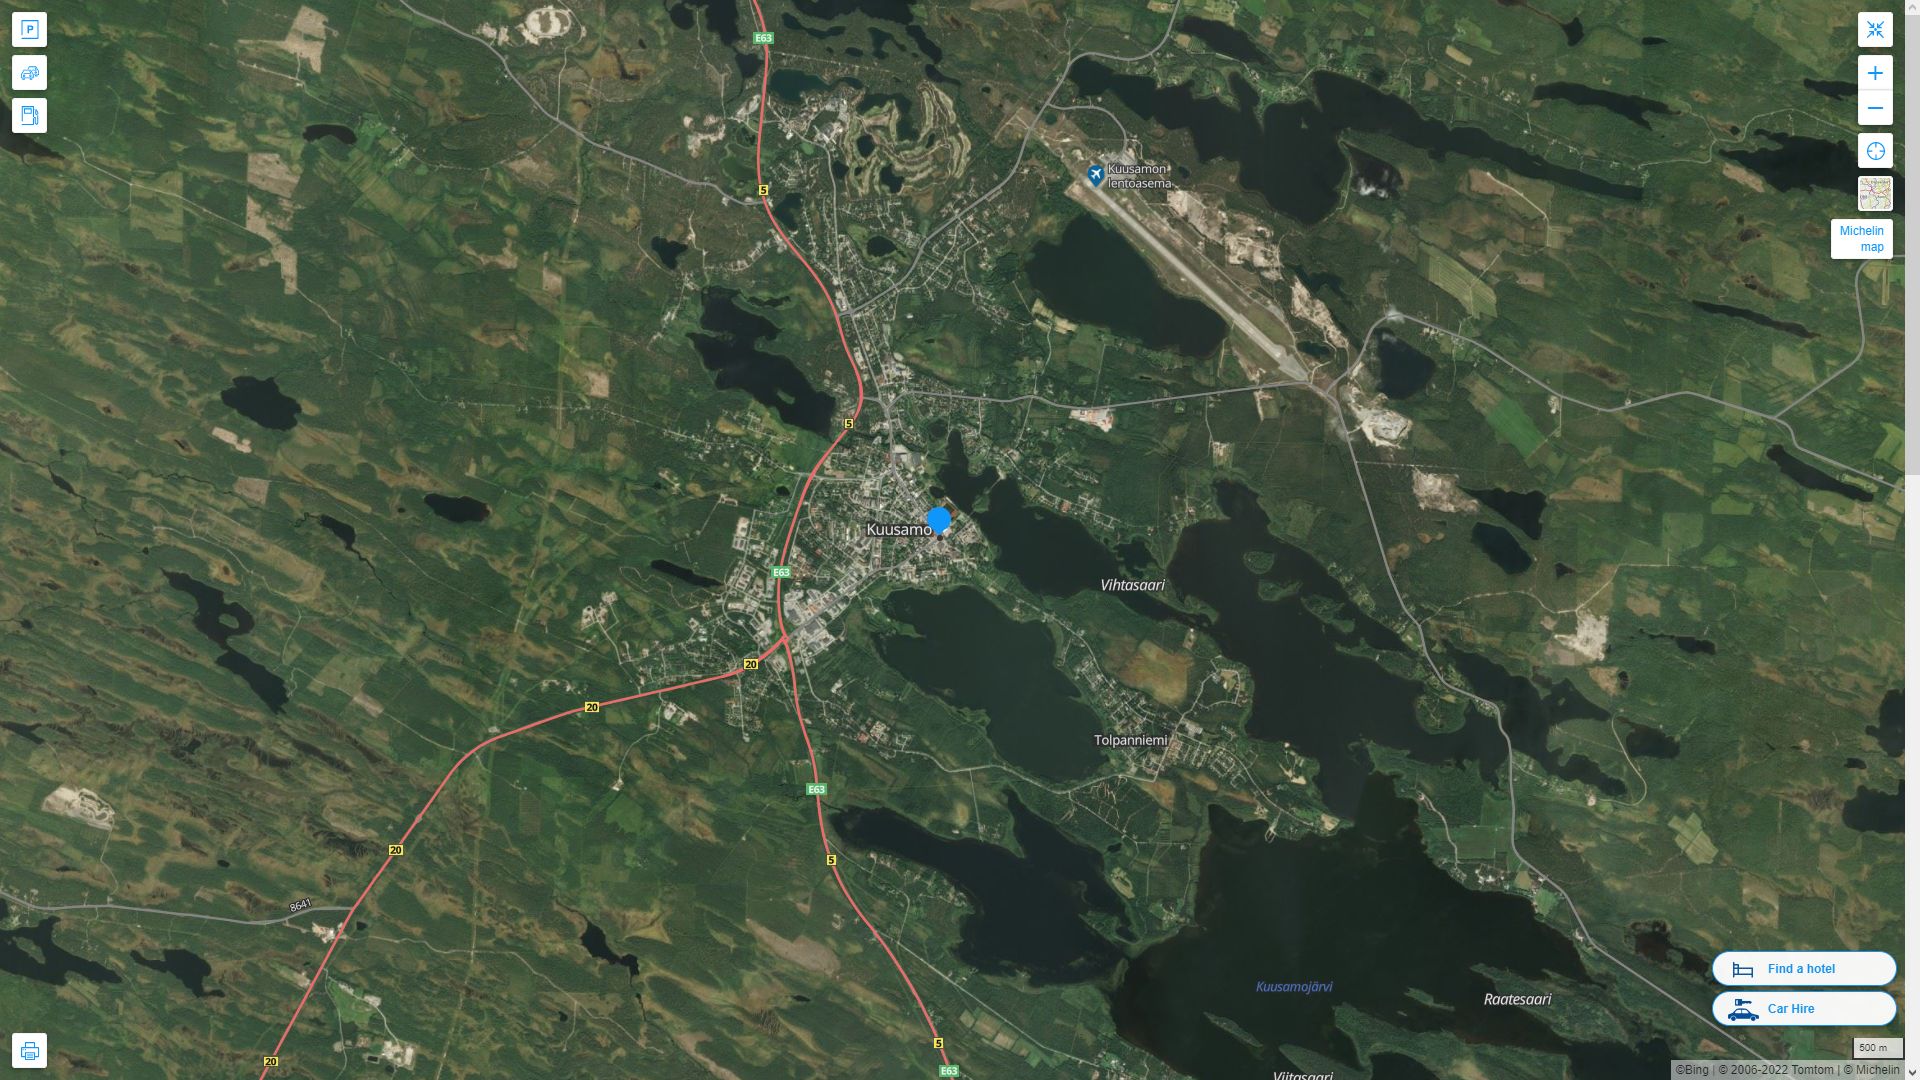 Kuusamo Highway and Road Map with Satellite View